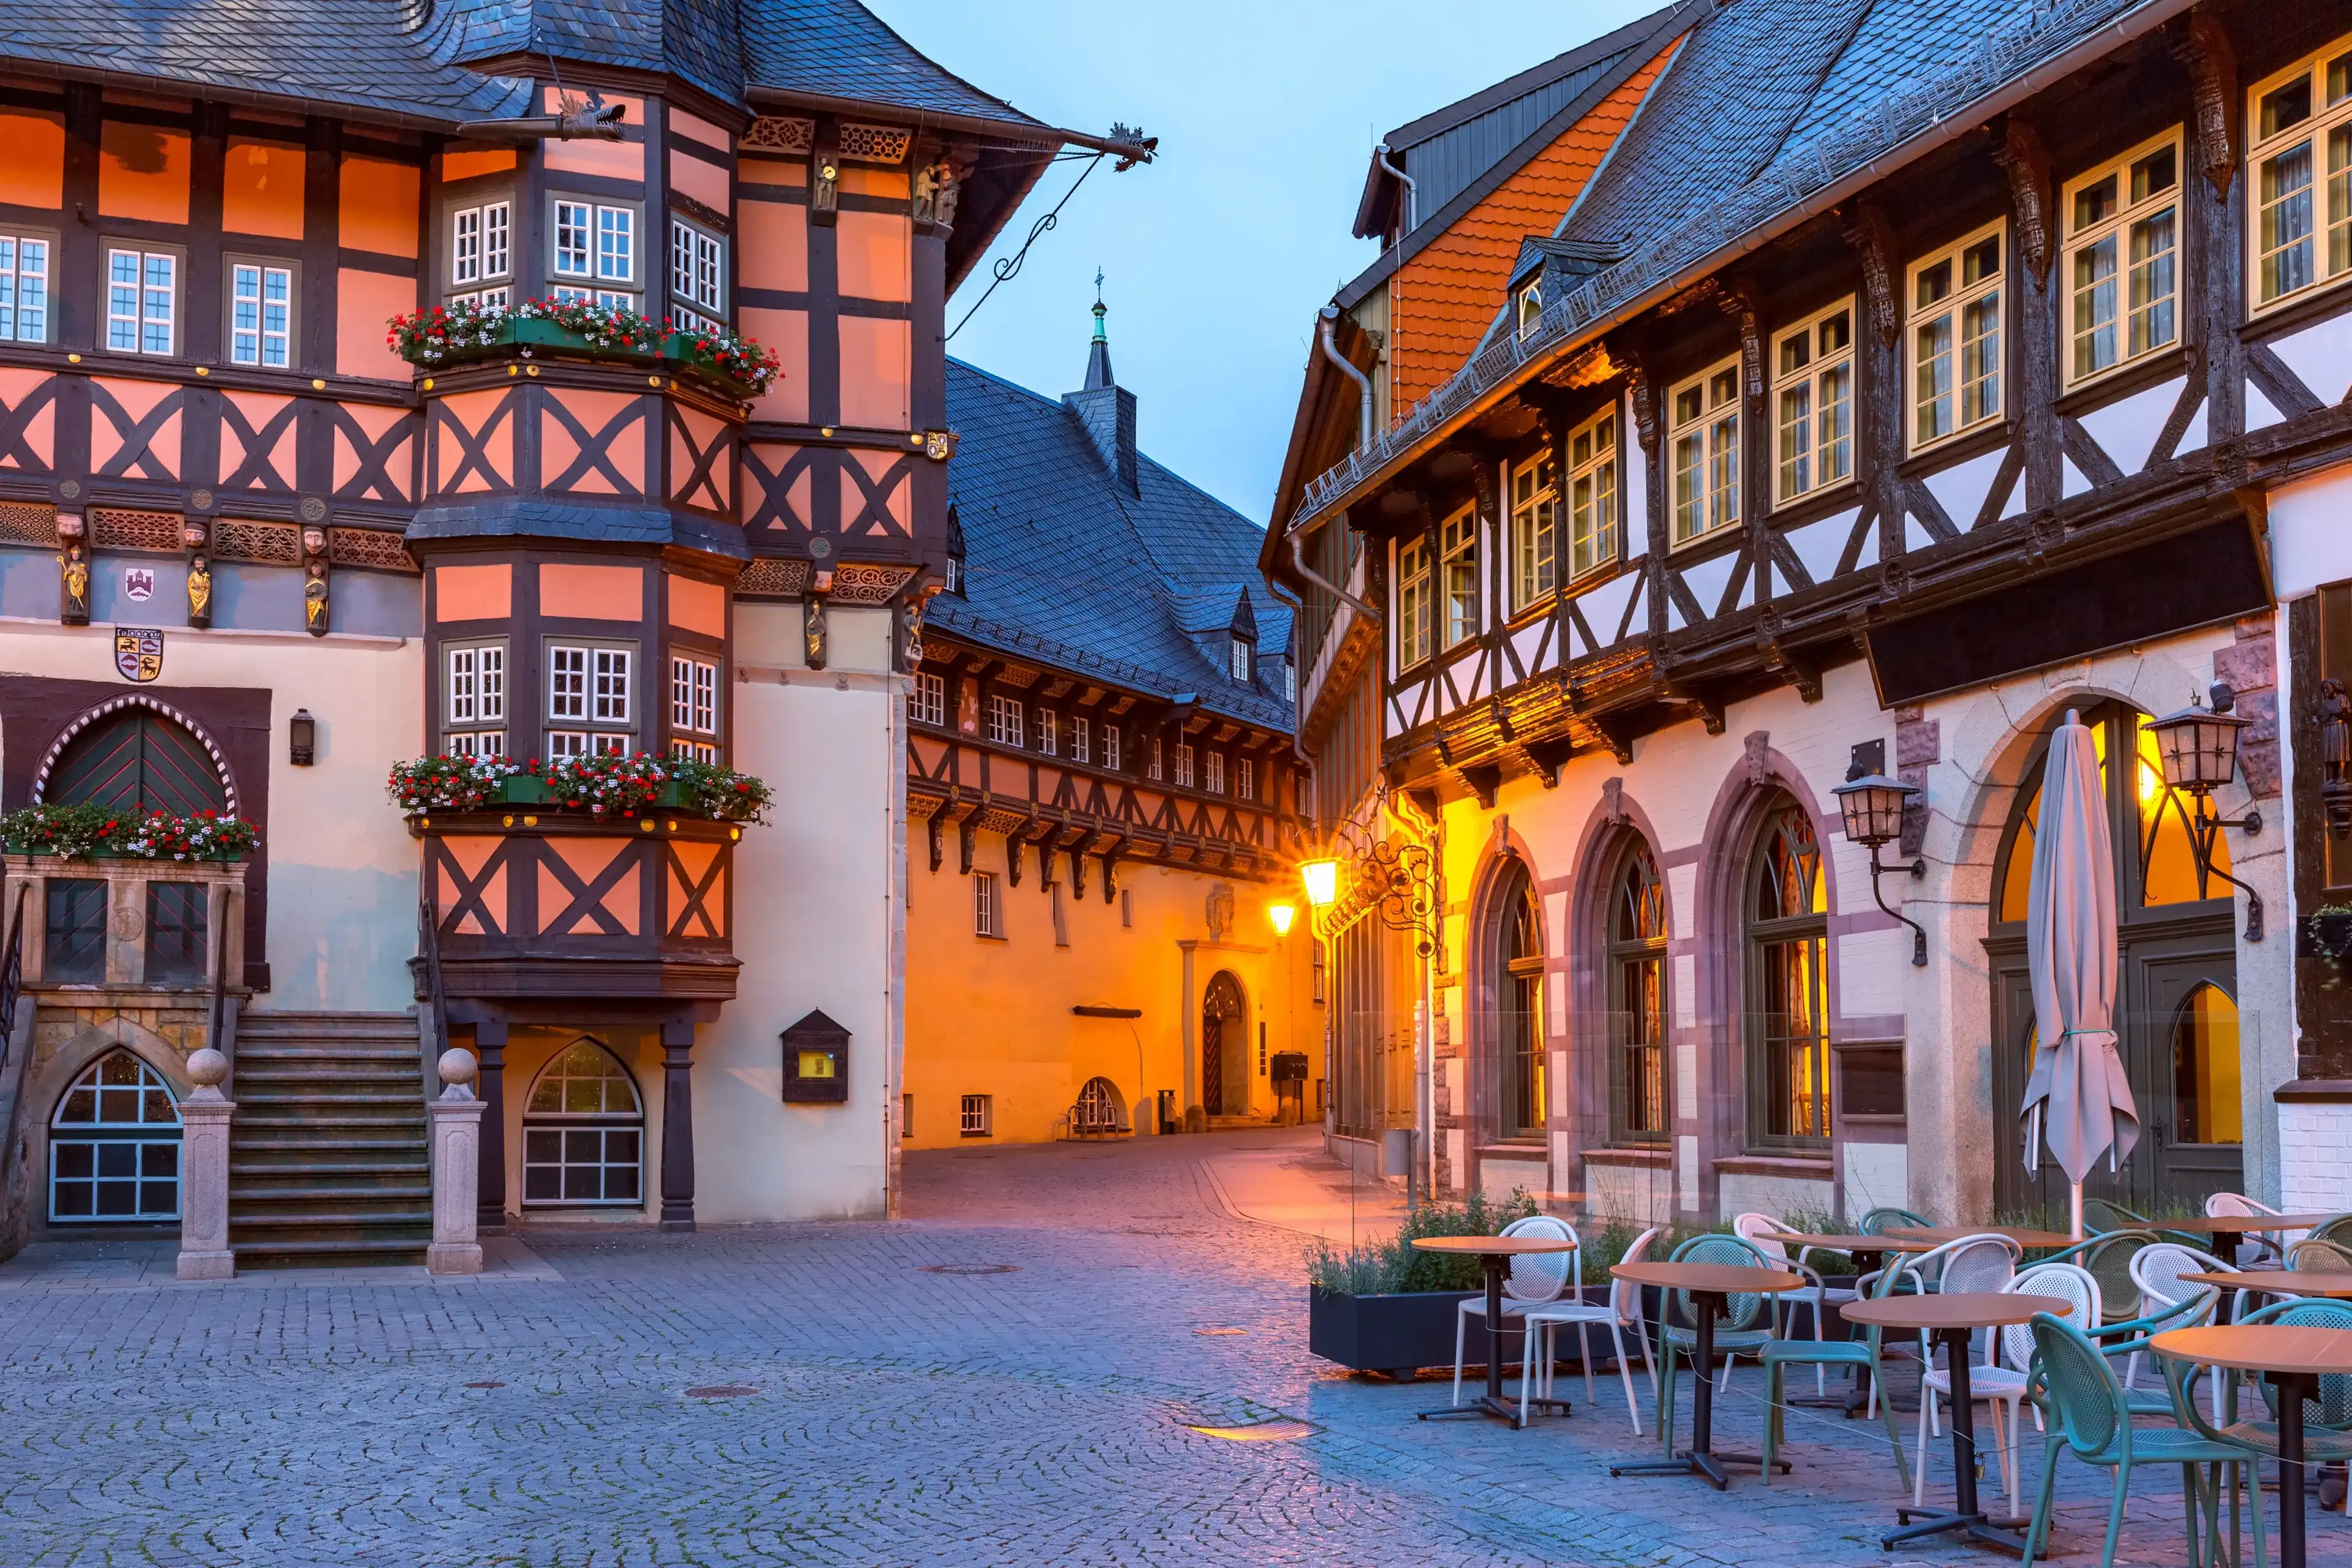 Saxony-Anhalt hotels. Best hotels in Saxony-Anhalt, Germany